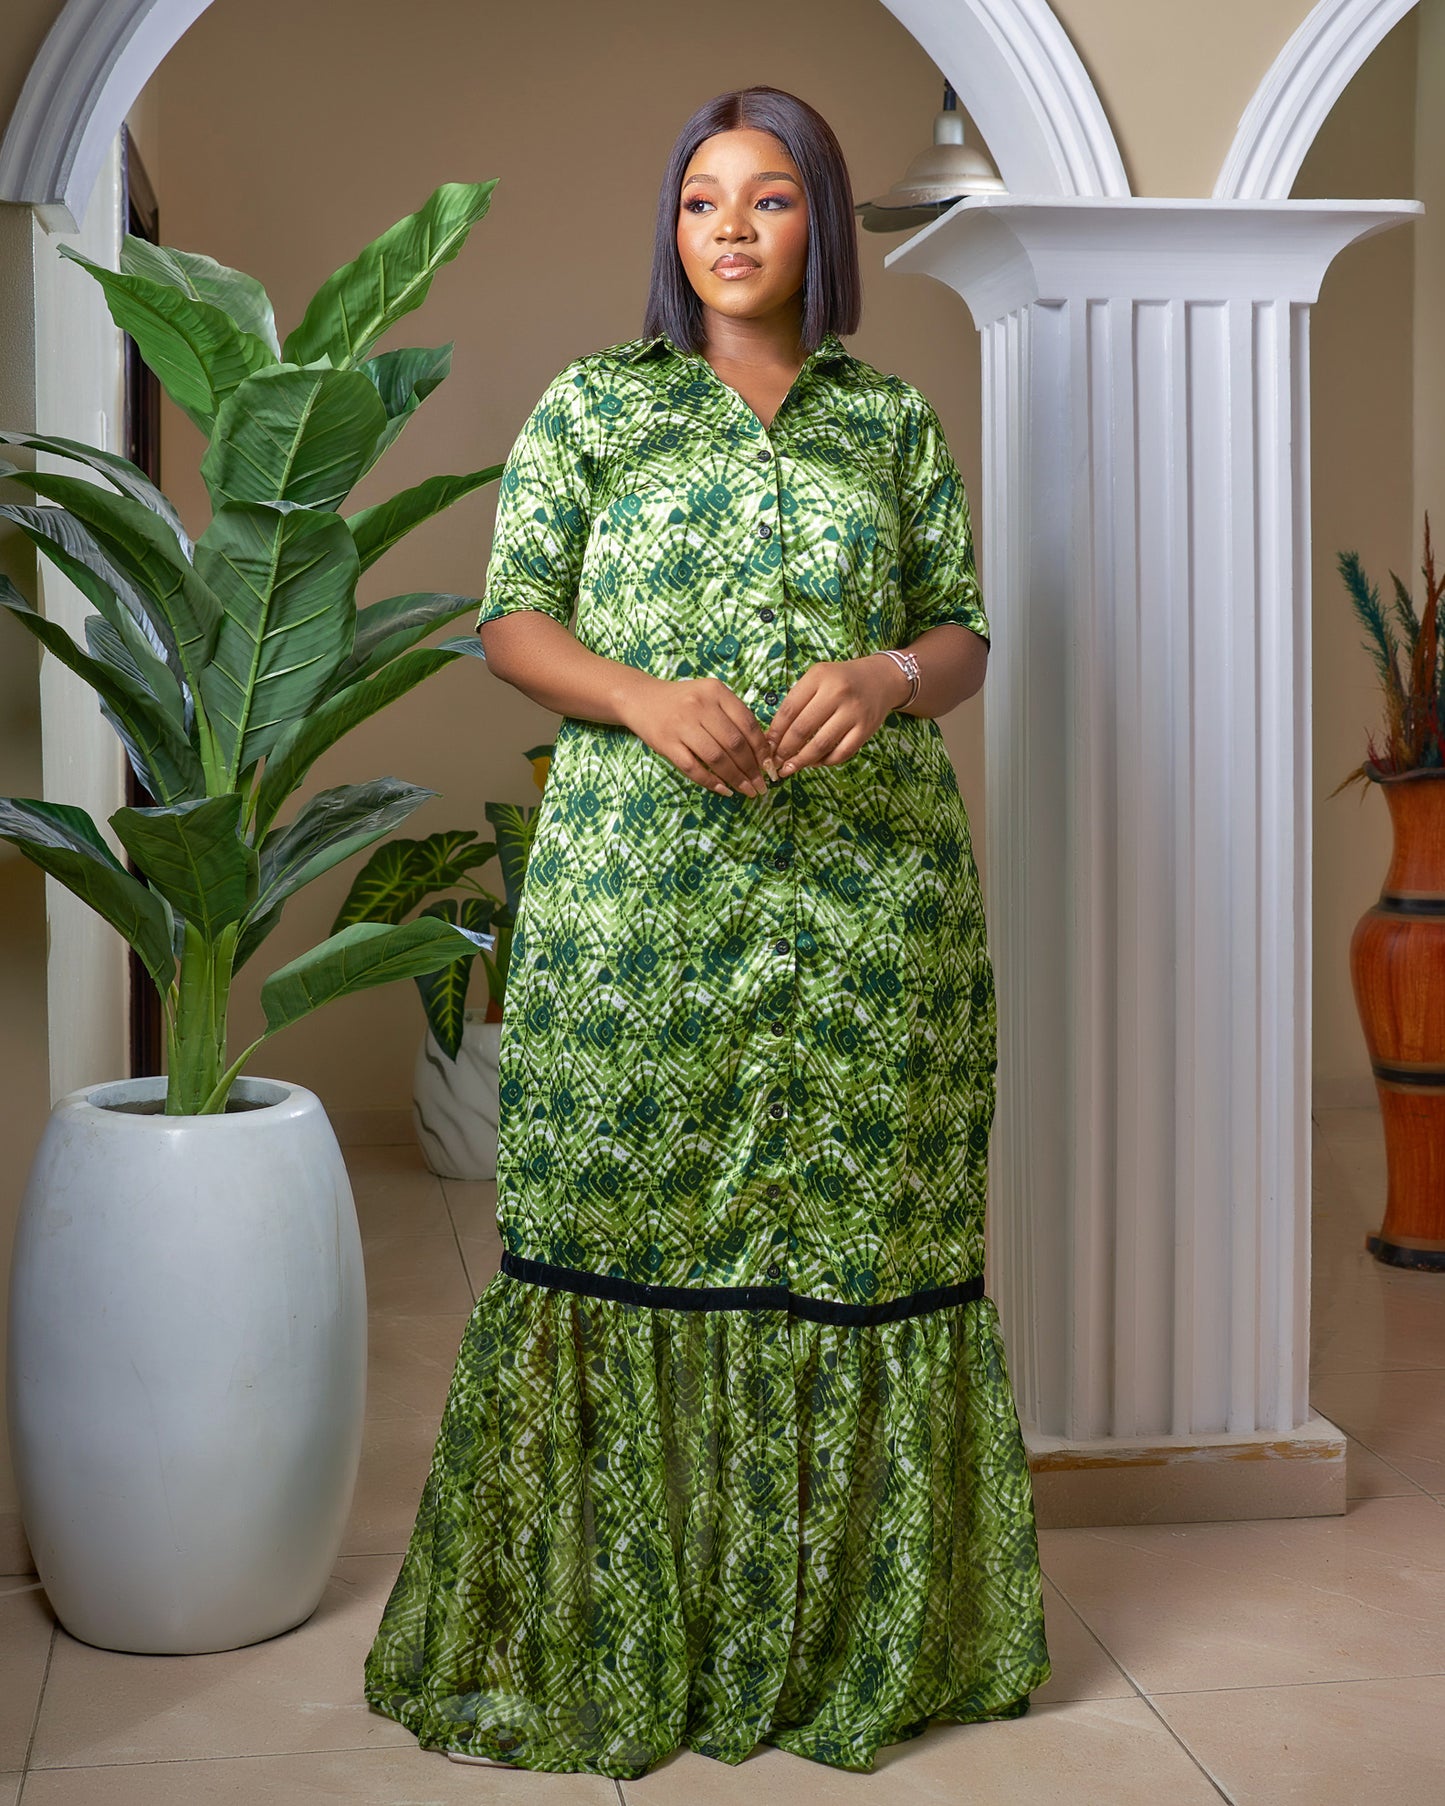 Marianne African print dress